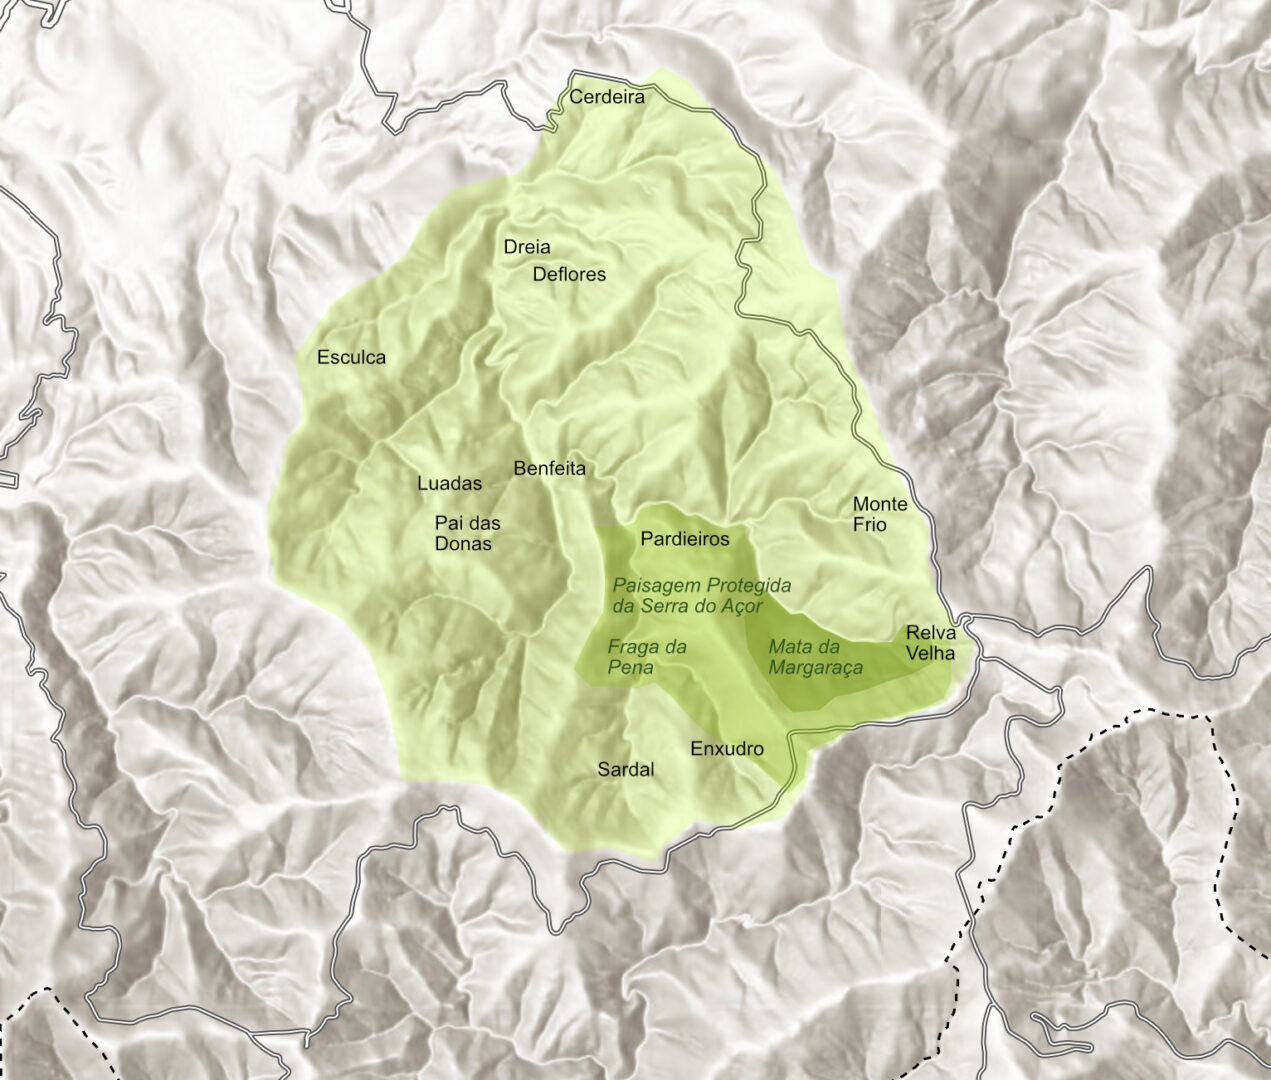 The region of Benfeita, where ArBOR promotes environmental regeneration strategies